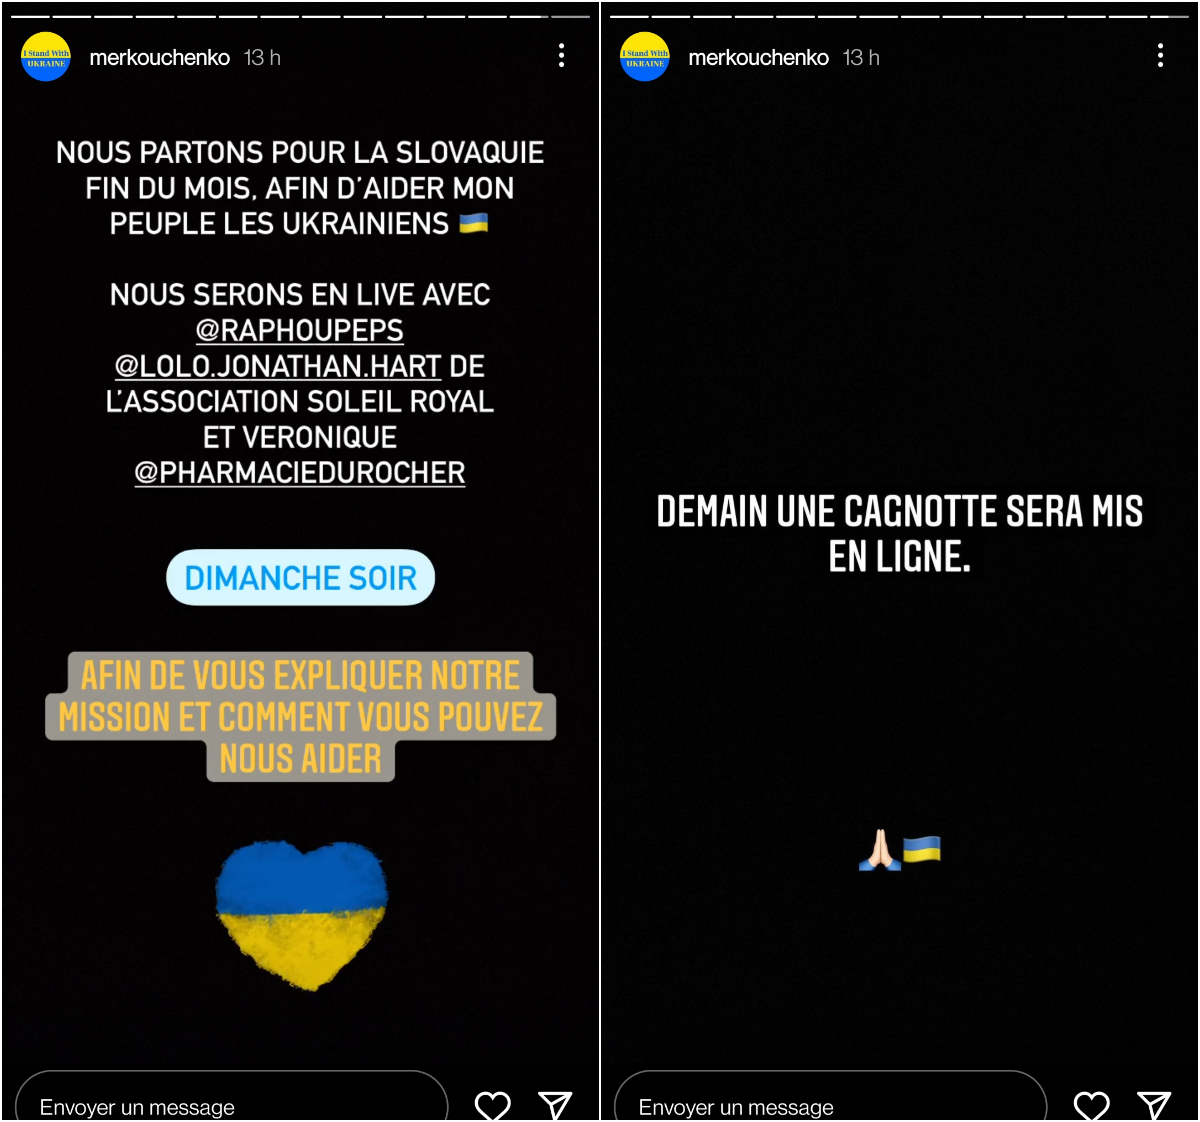  Raphaël Pépin veut aider l'Ukraine @Instagram